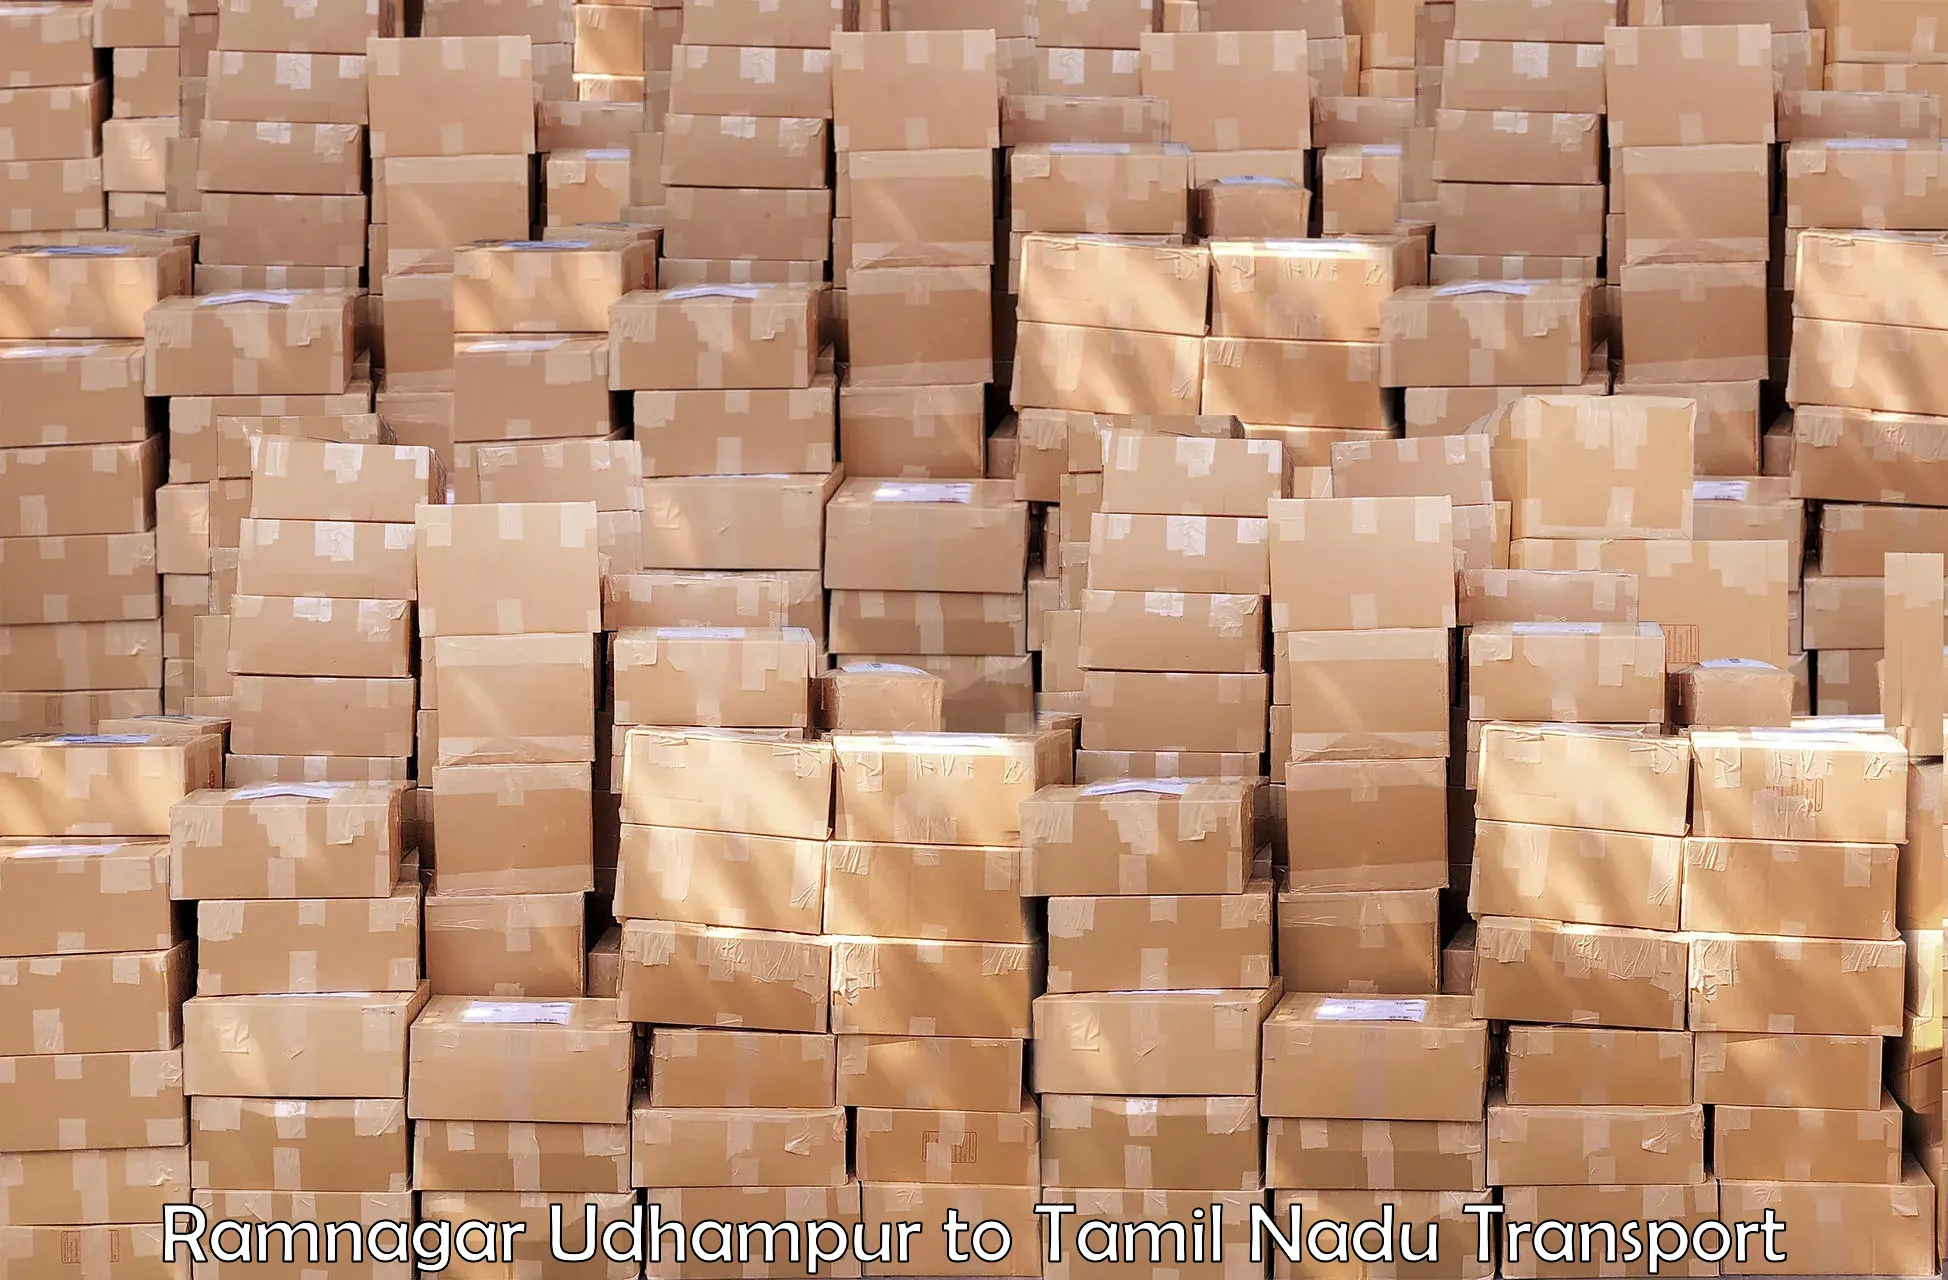 Daily parcel service transport in Ramnagar Udhampur to Thiruporur